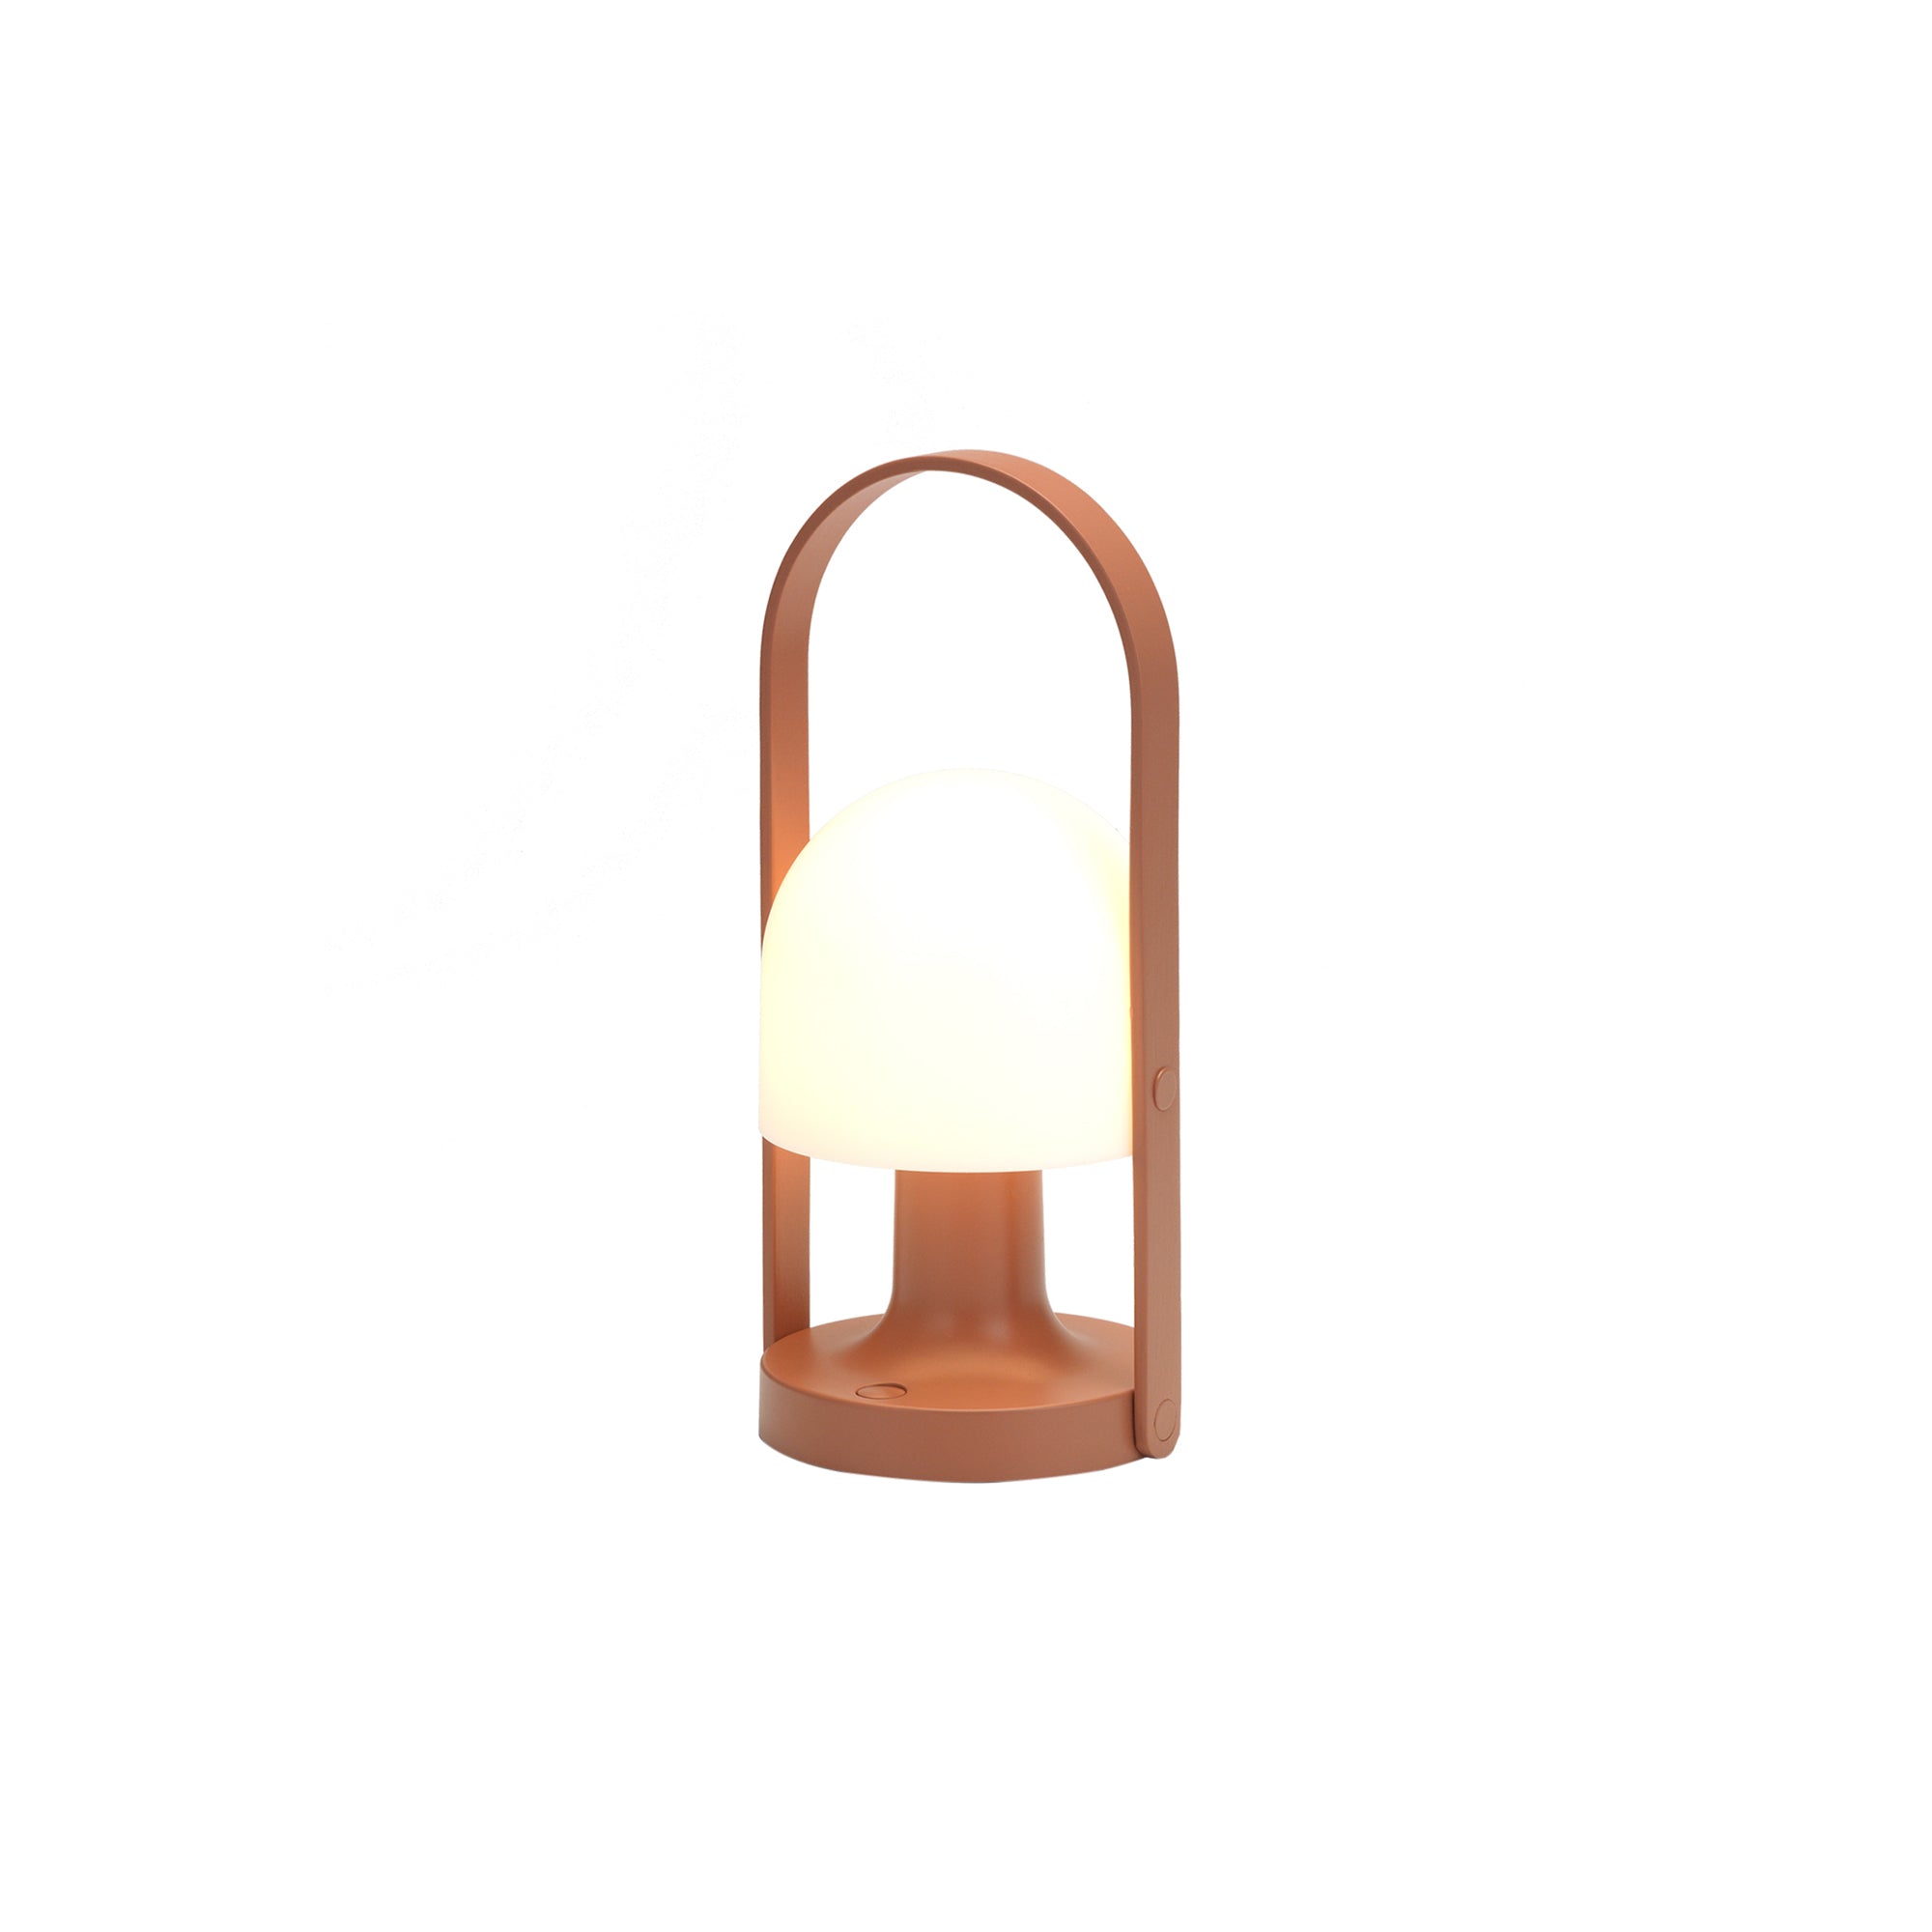 FollowMe Portable Table Lamp: Terracotta